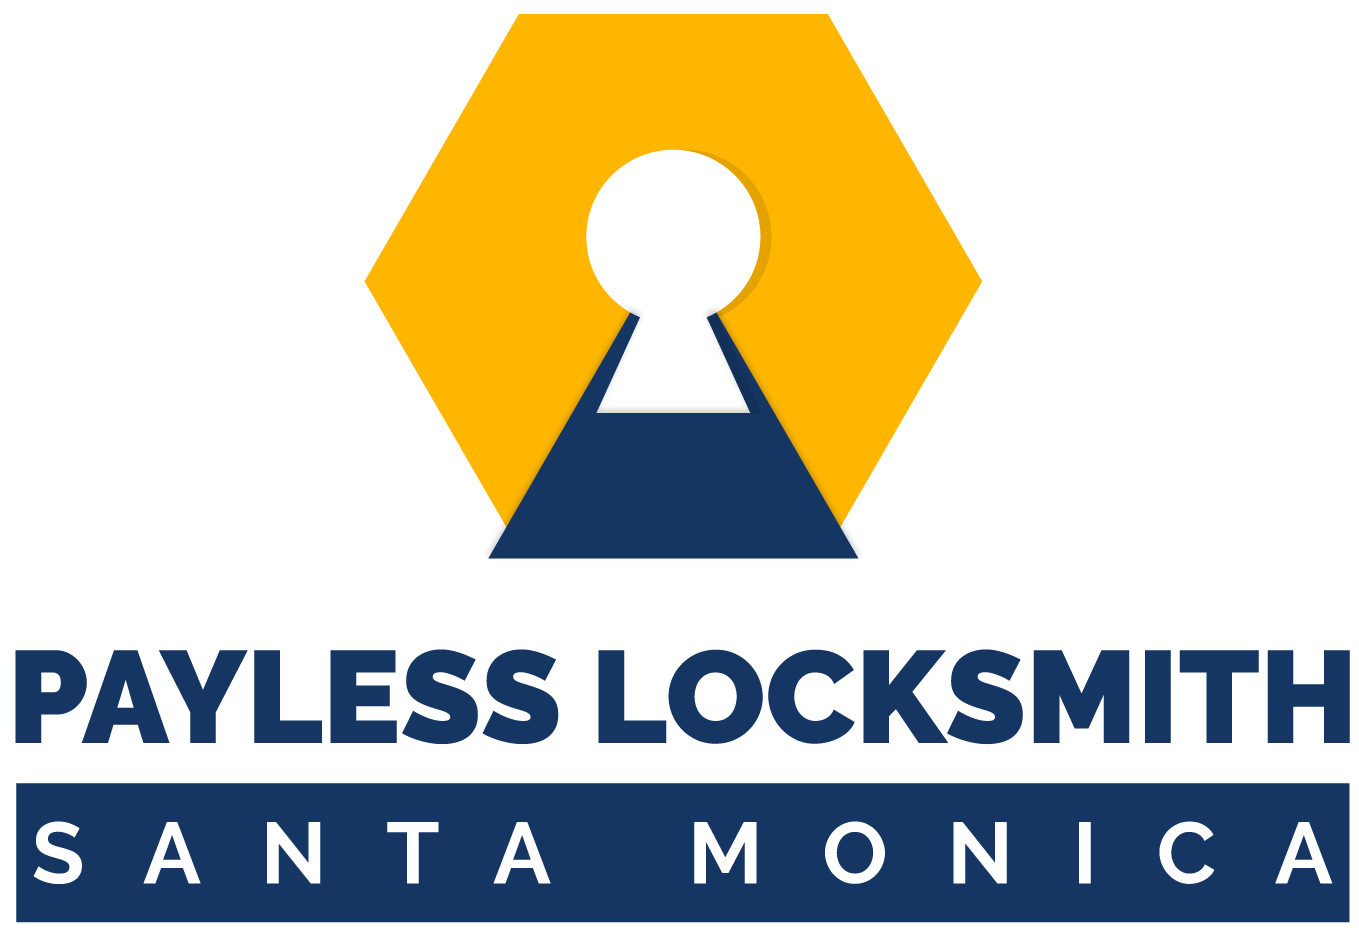 Payless Locksmith Santa Monica